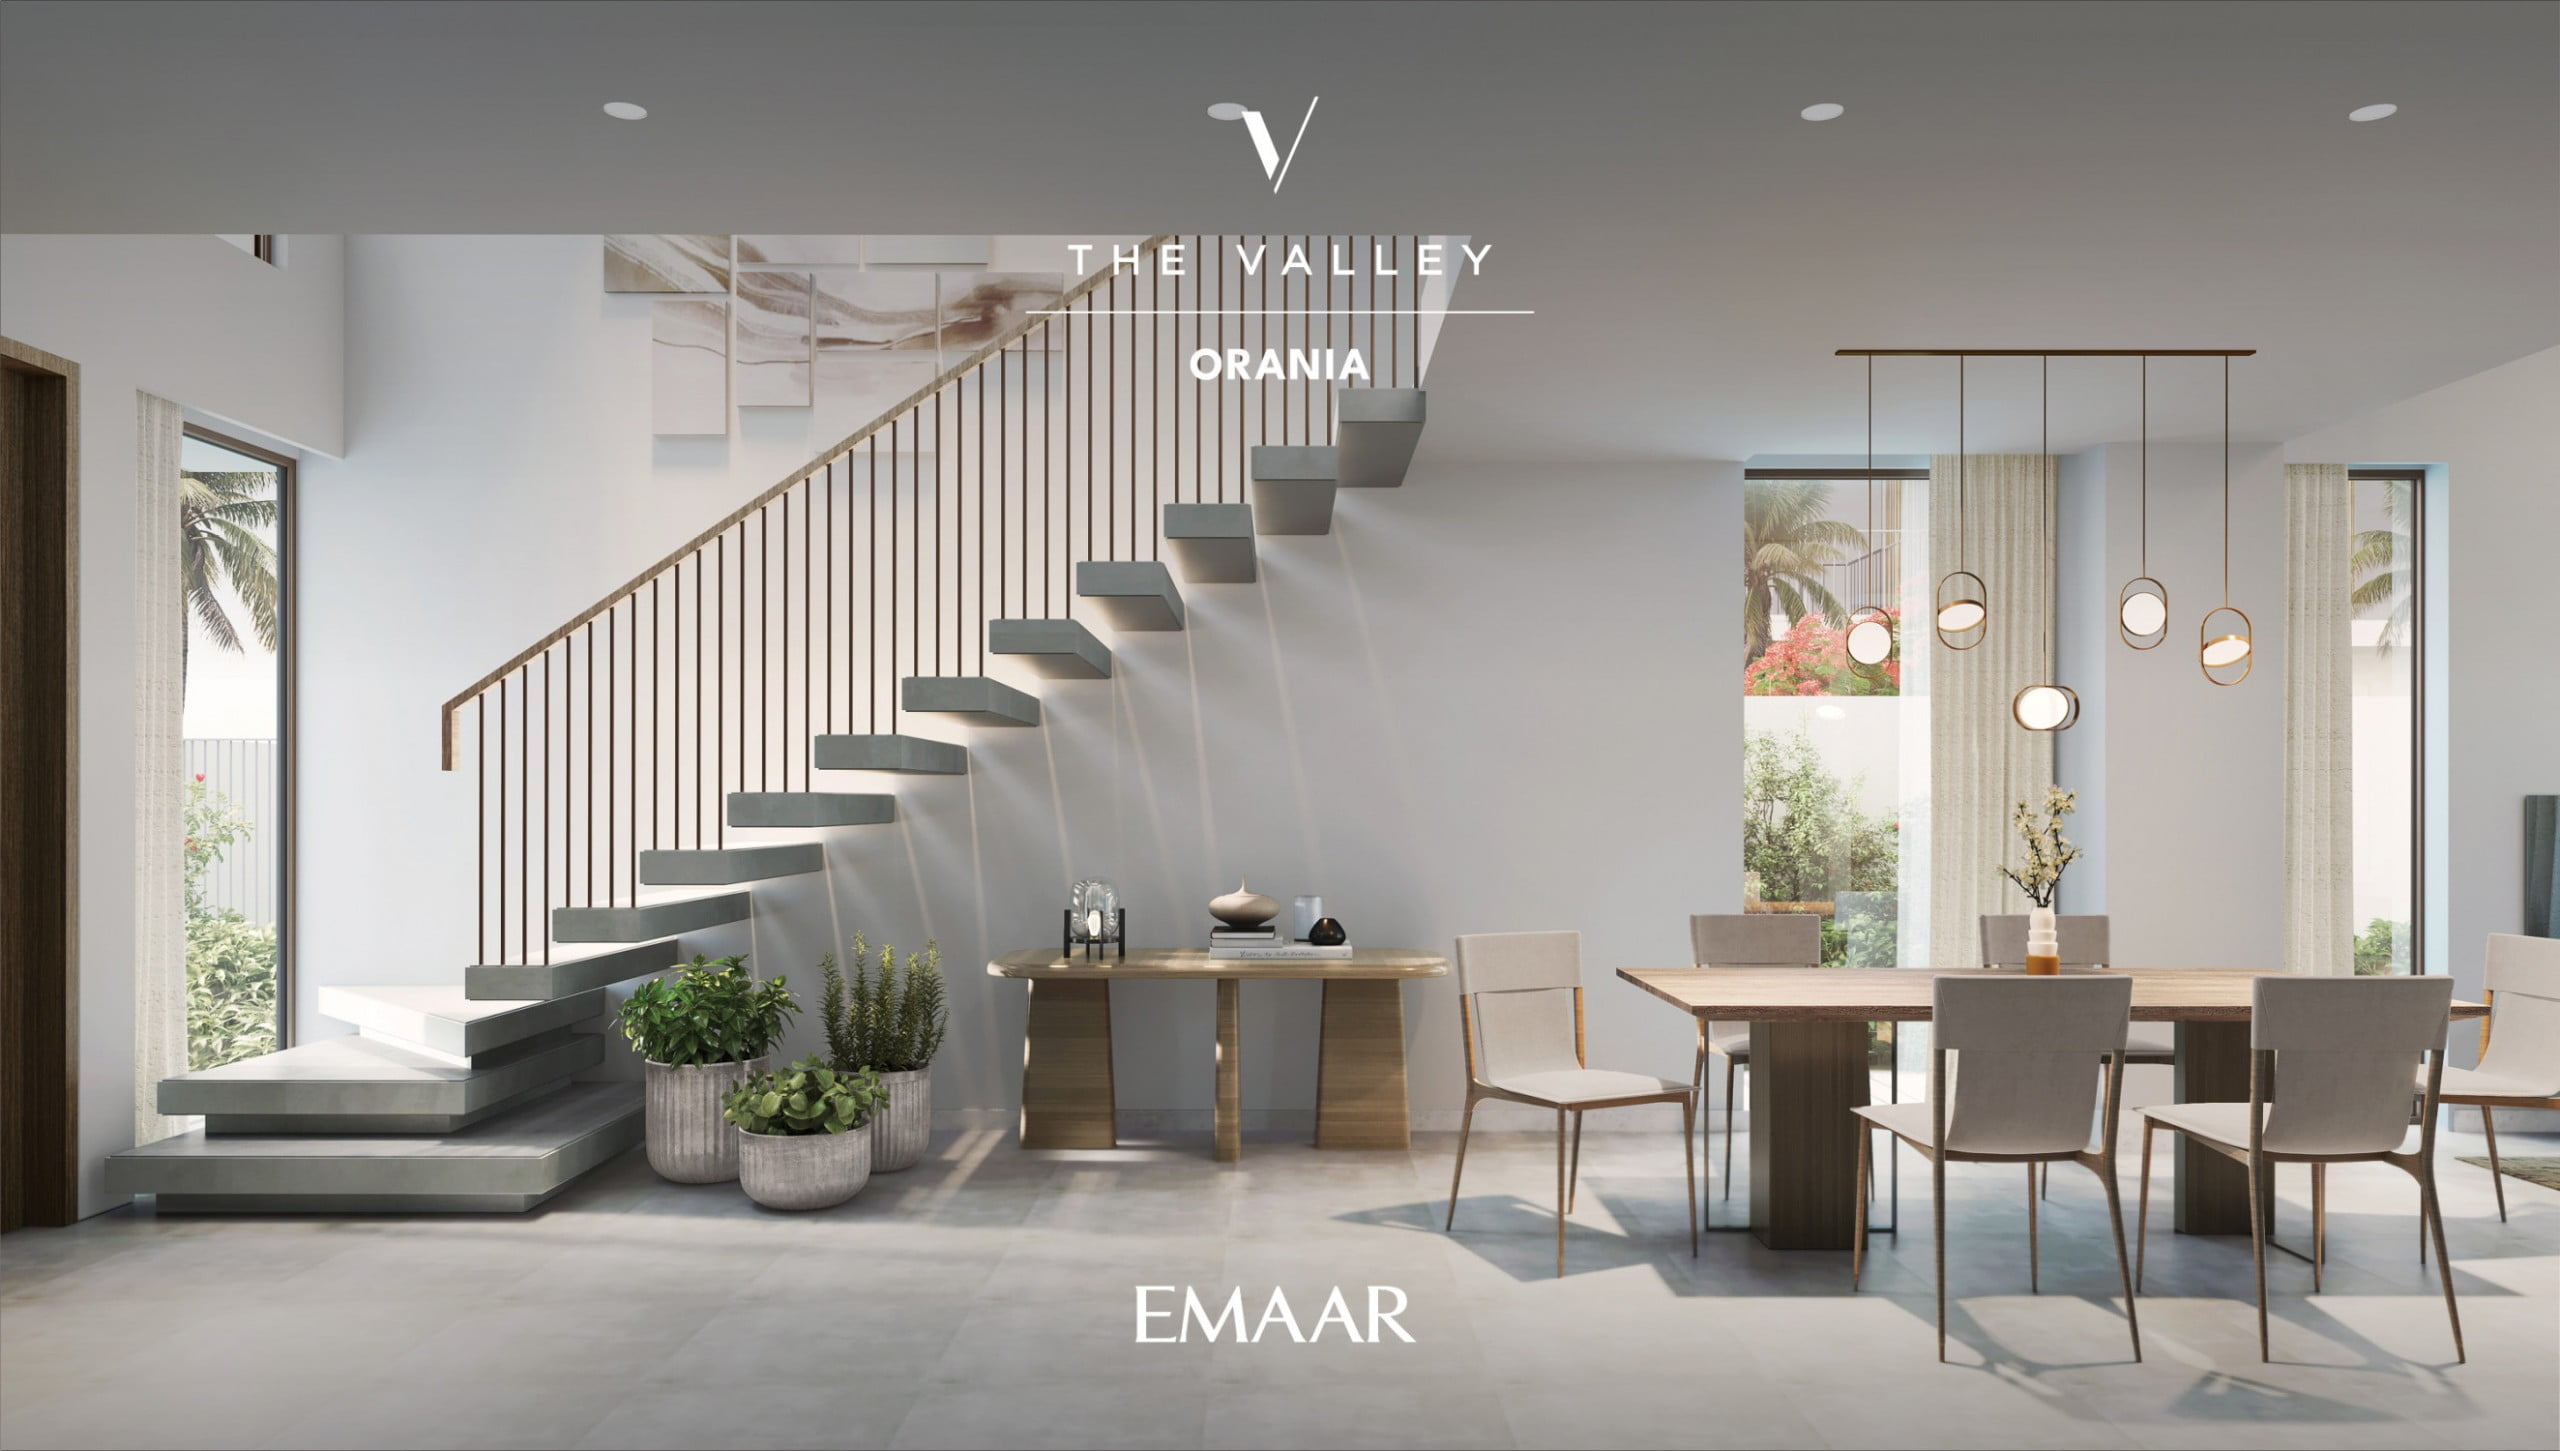 ORANIA THE VALLEY EMAAR 15 scaled - Immobilier Dubai